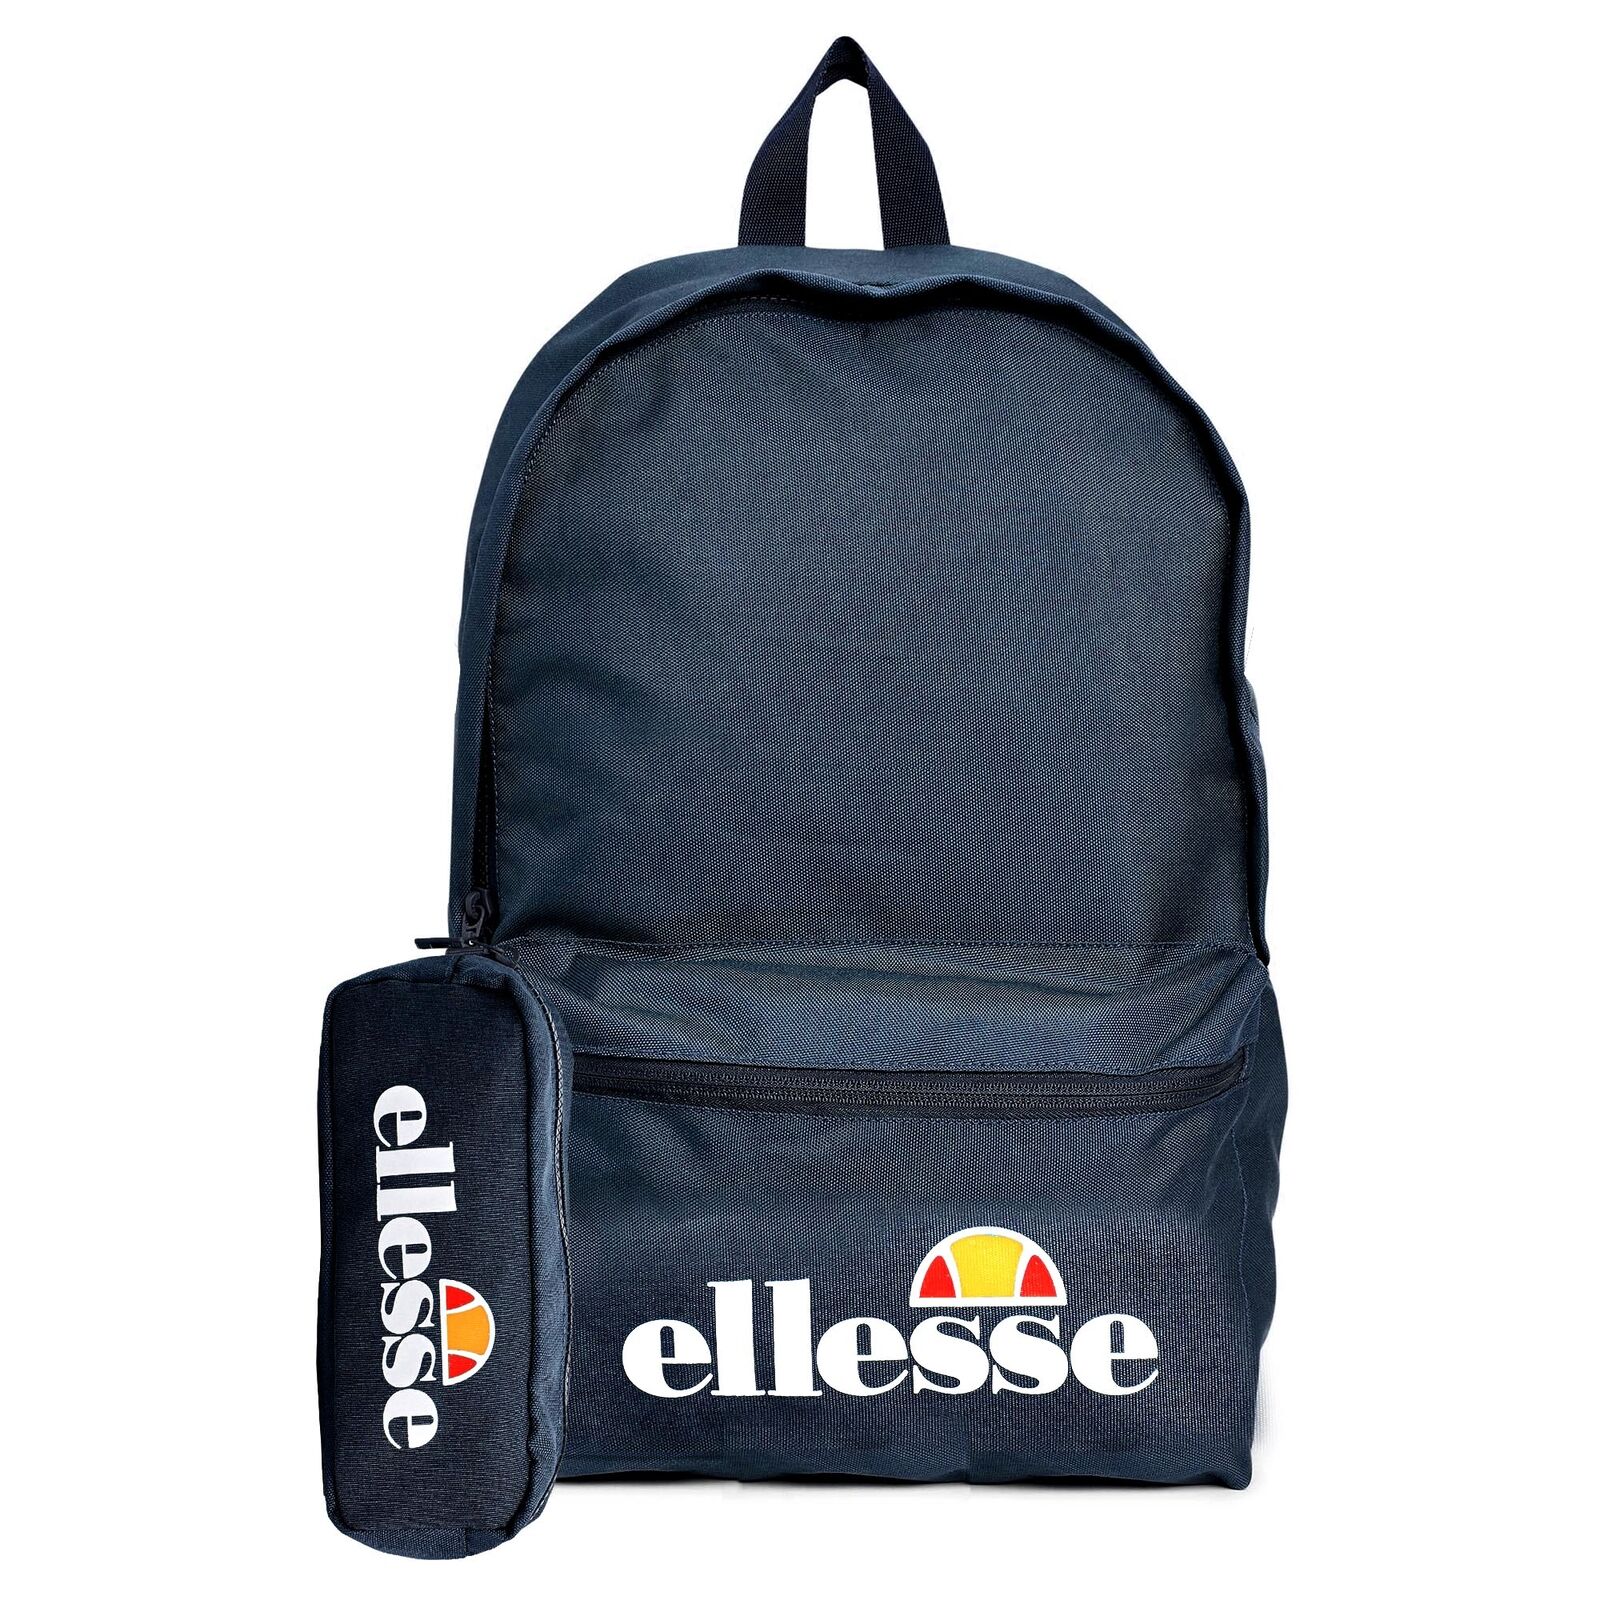 Ellesse Heritage Rolby Backpack Pencil Case School College Sports Bag Navy Blue